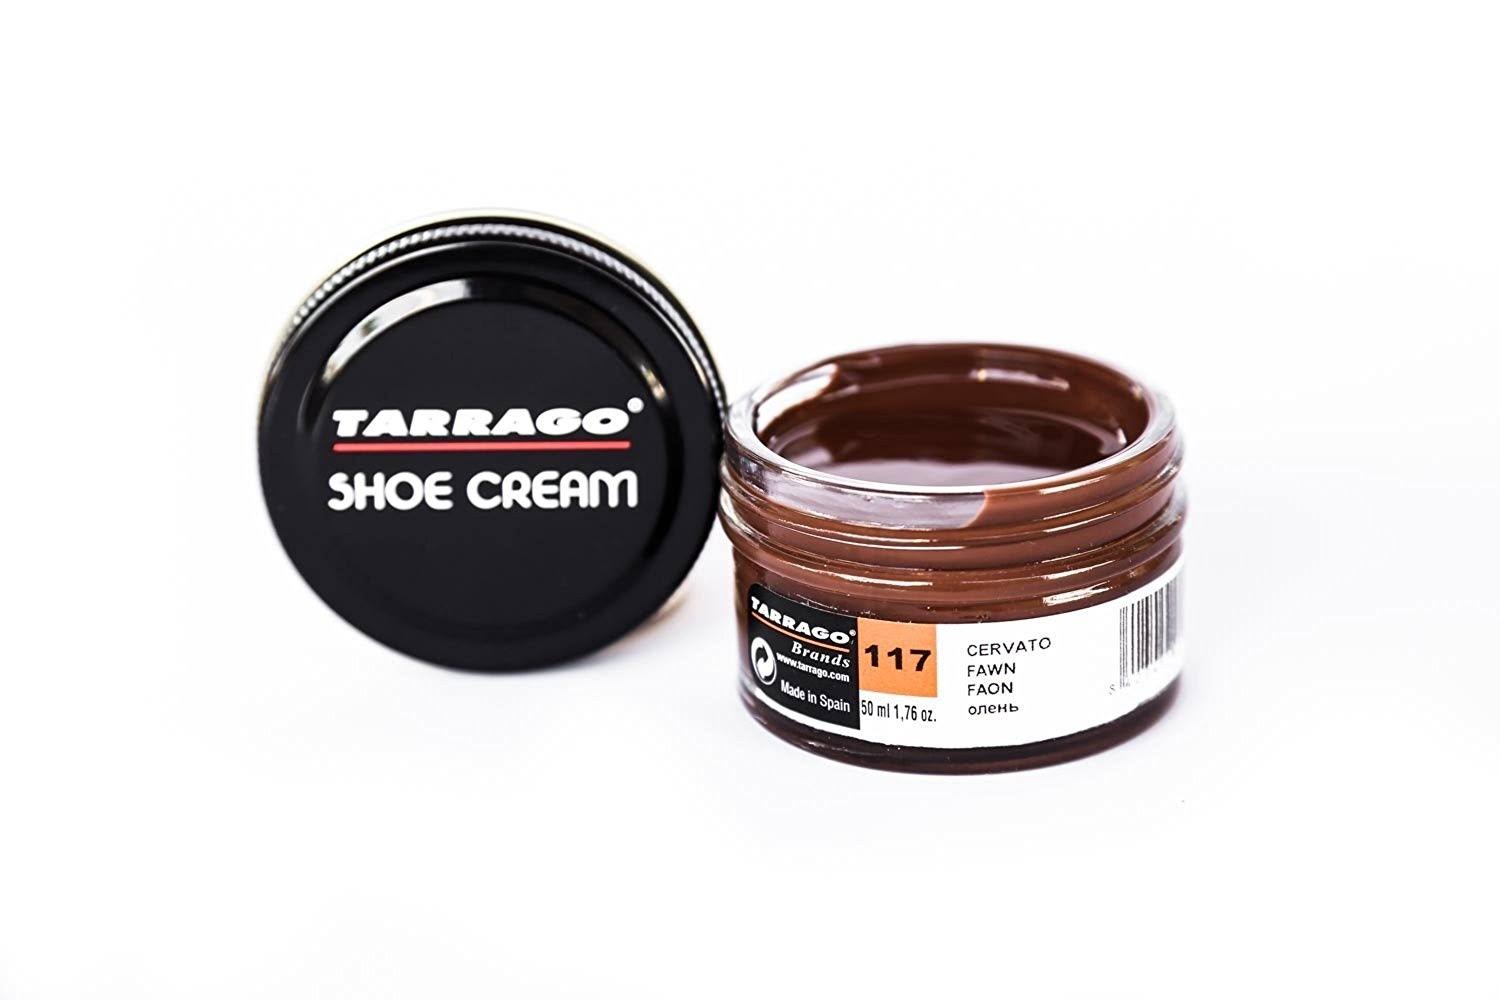 Tarrago Unisex-Adult Shoe Cream Jar 50 ml Shoe Treatments & Polishes | Shoe Care & Accessories